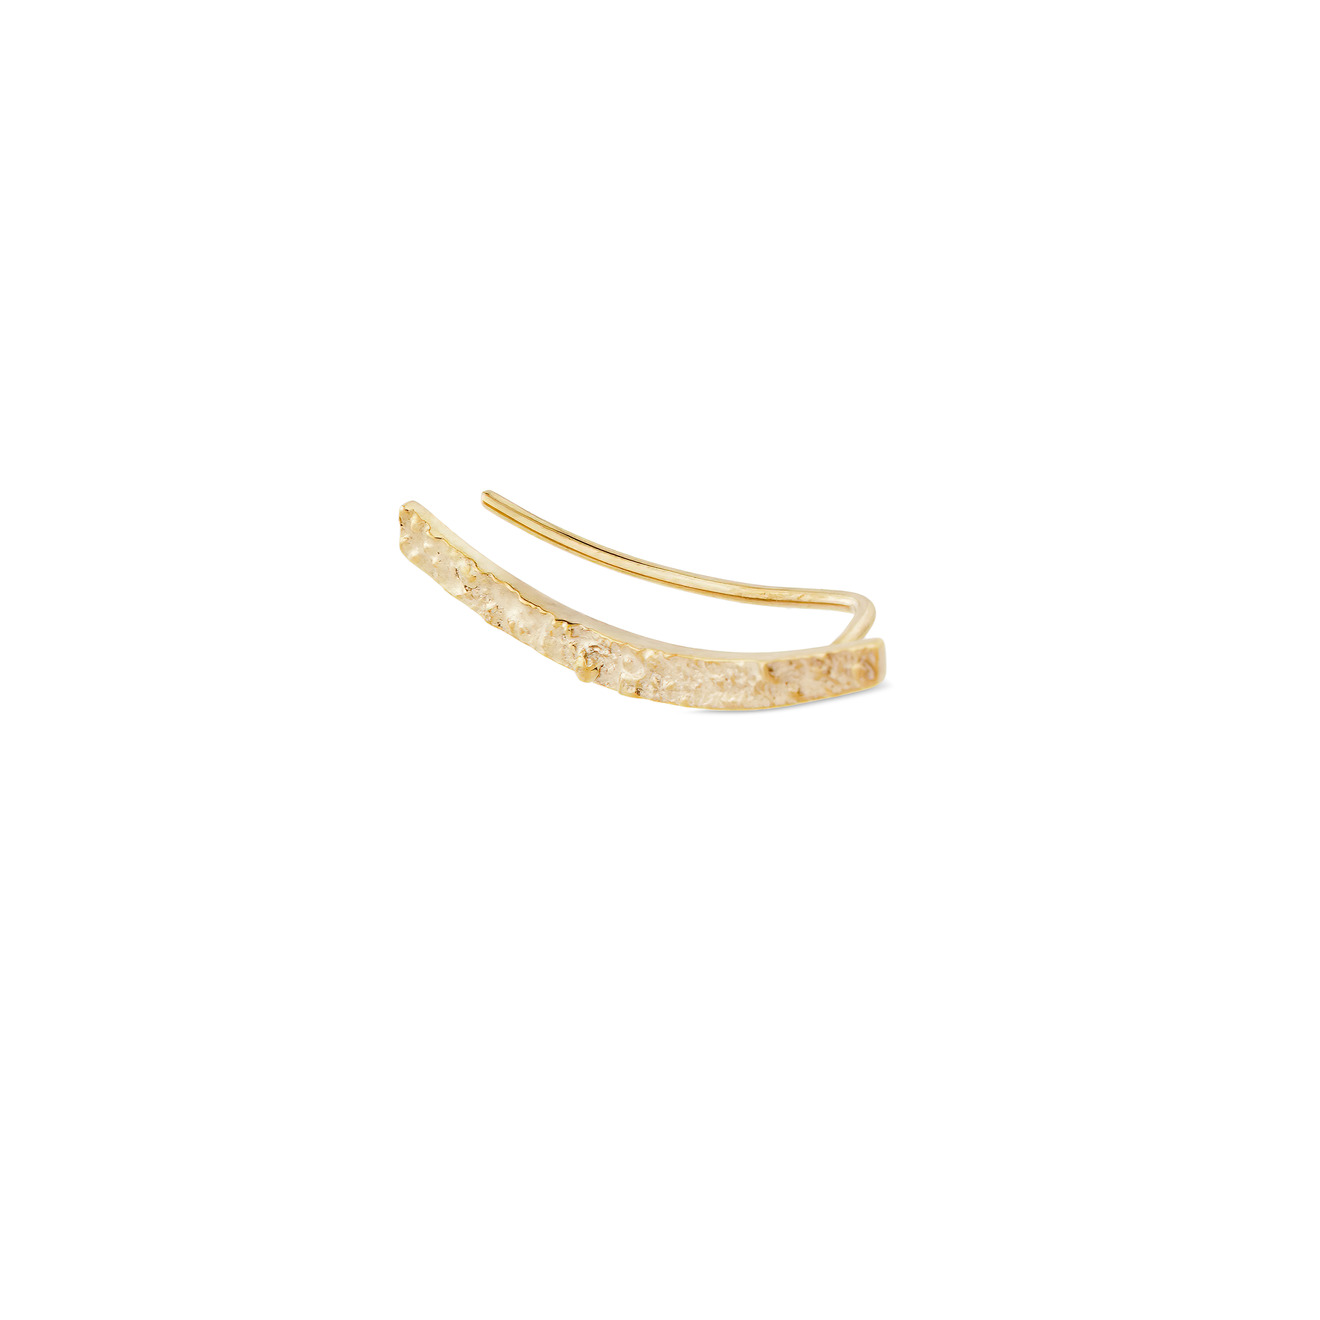 УРА jewelry Позолоченный клаймбер из серебра на правое ухо ms marble позолоченный клаймбер змея из серебра movement на правое ухо